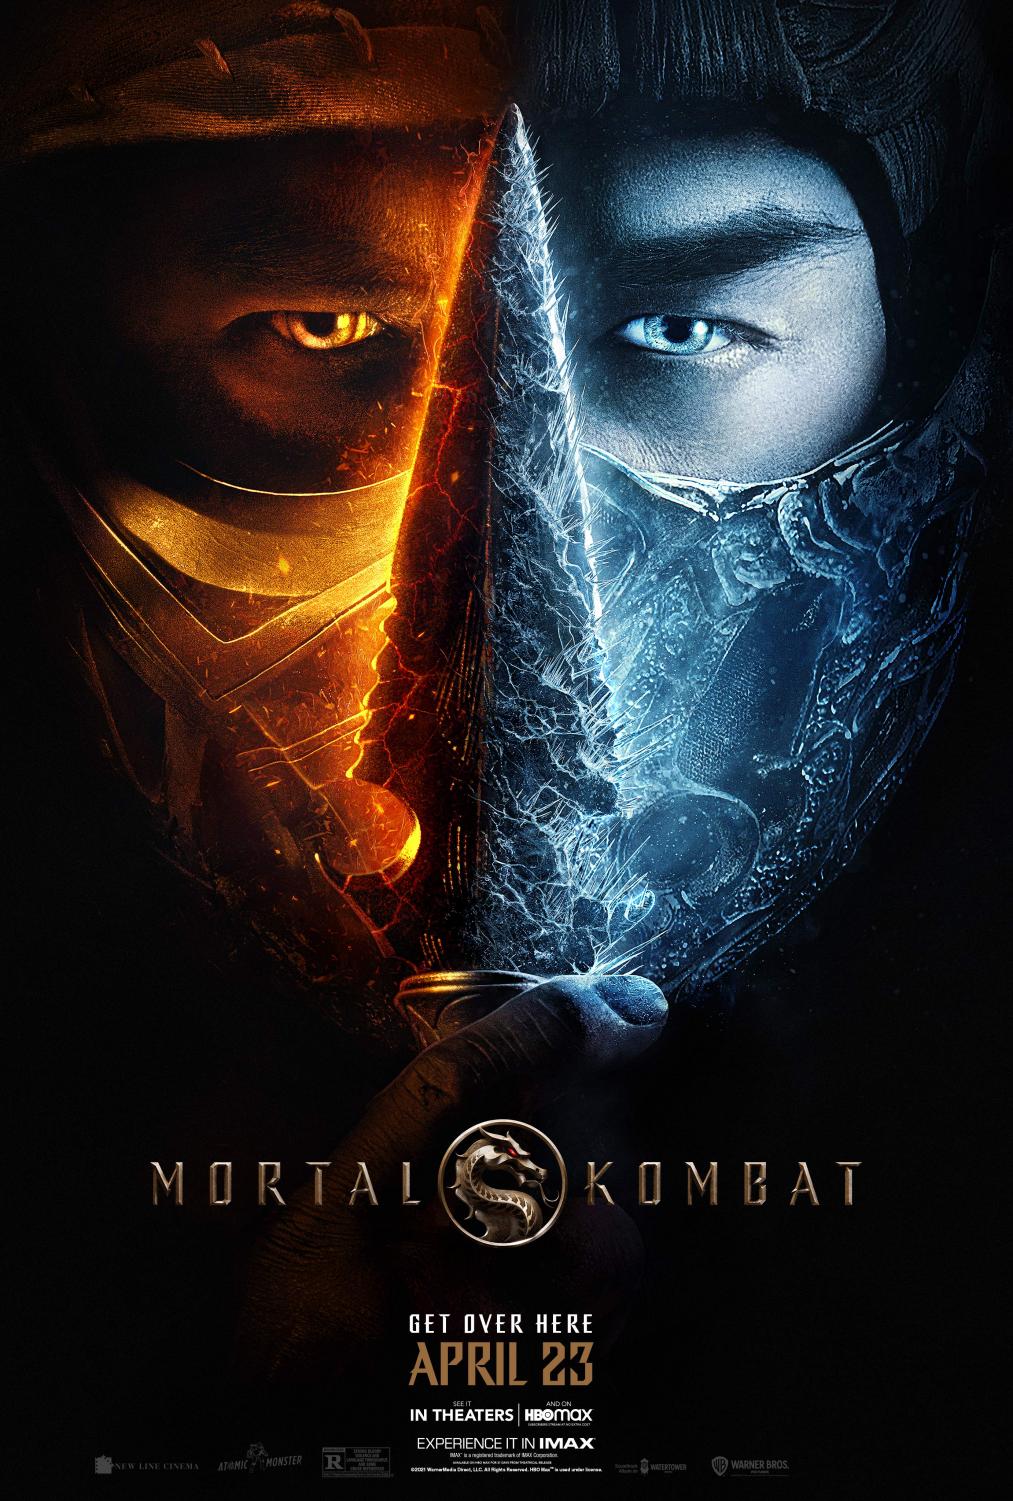 Mortal Kombat Fan Video Shows Custom Versions of Classic Fatalities